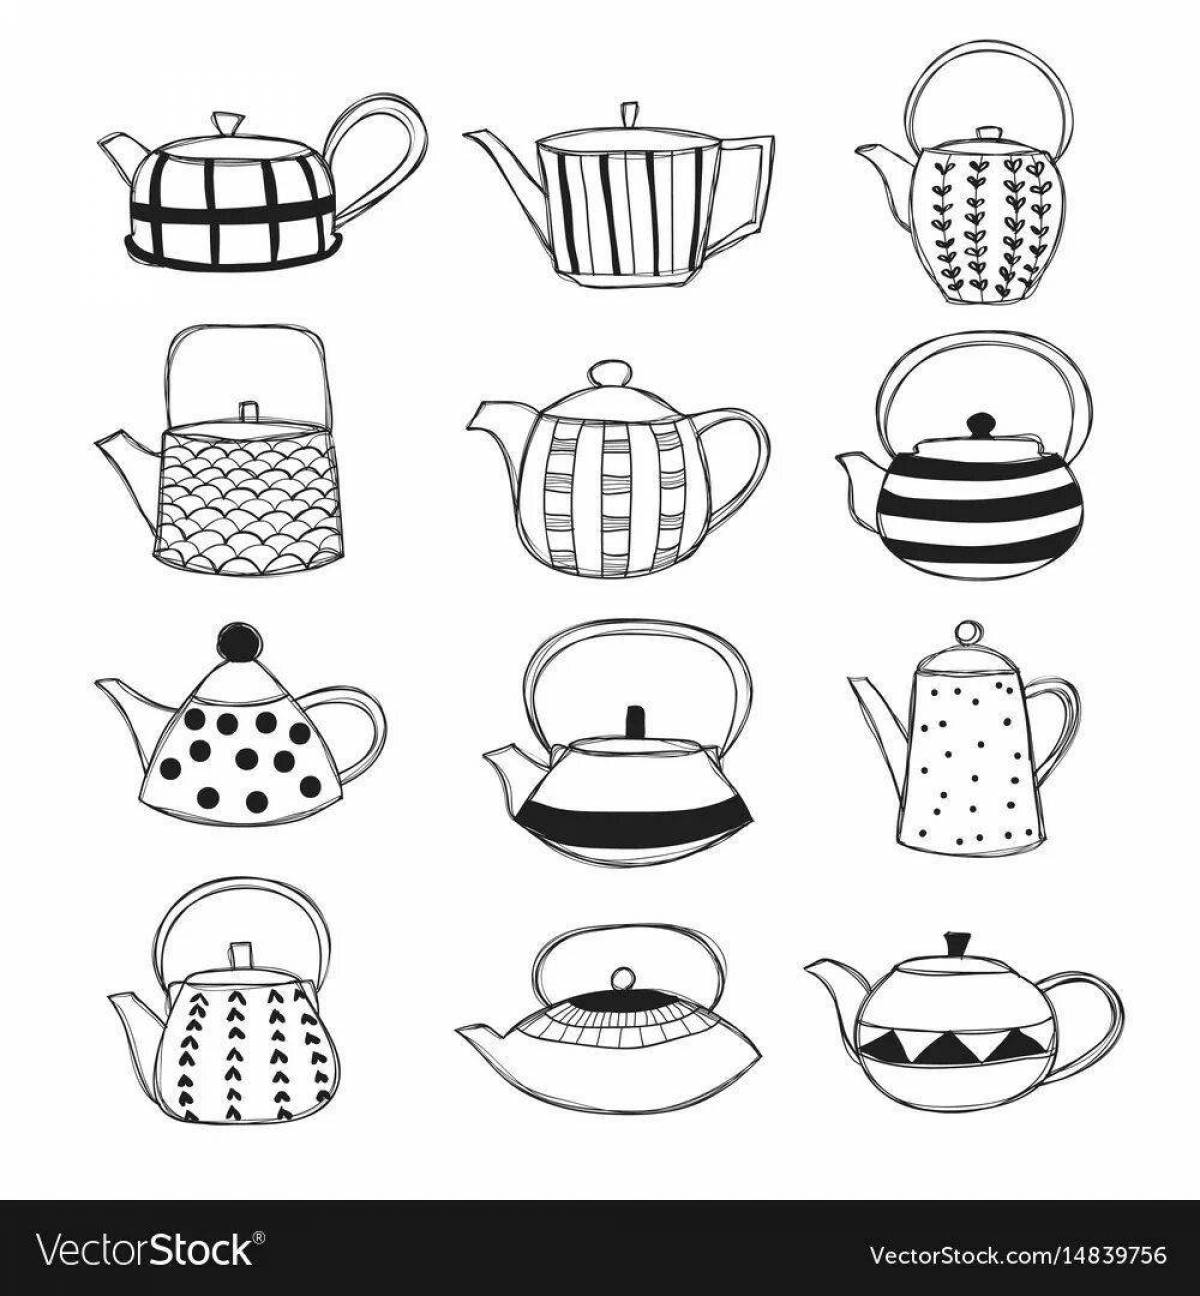 Gorgeous teapot coloring page